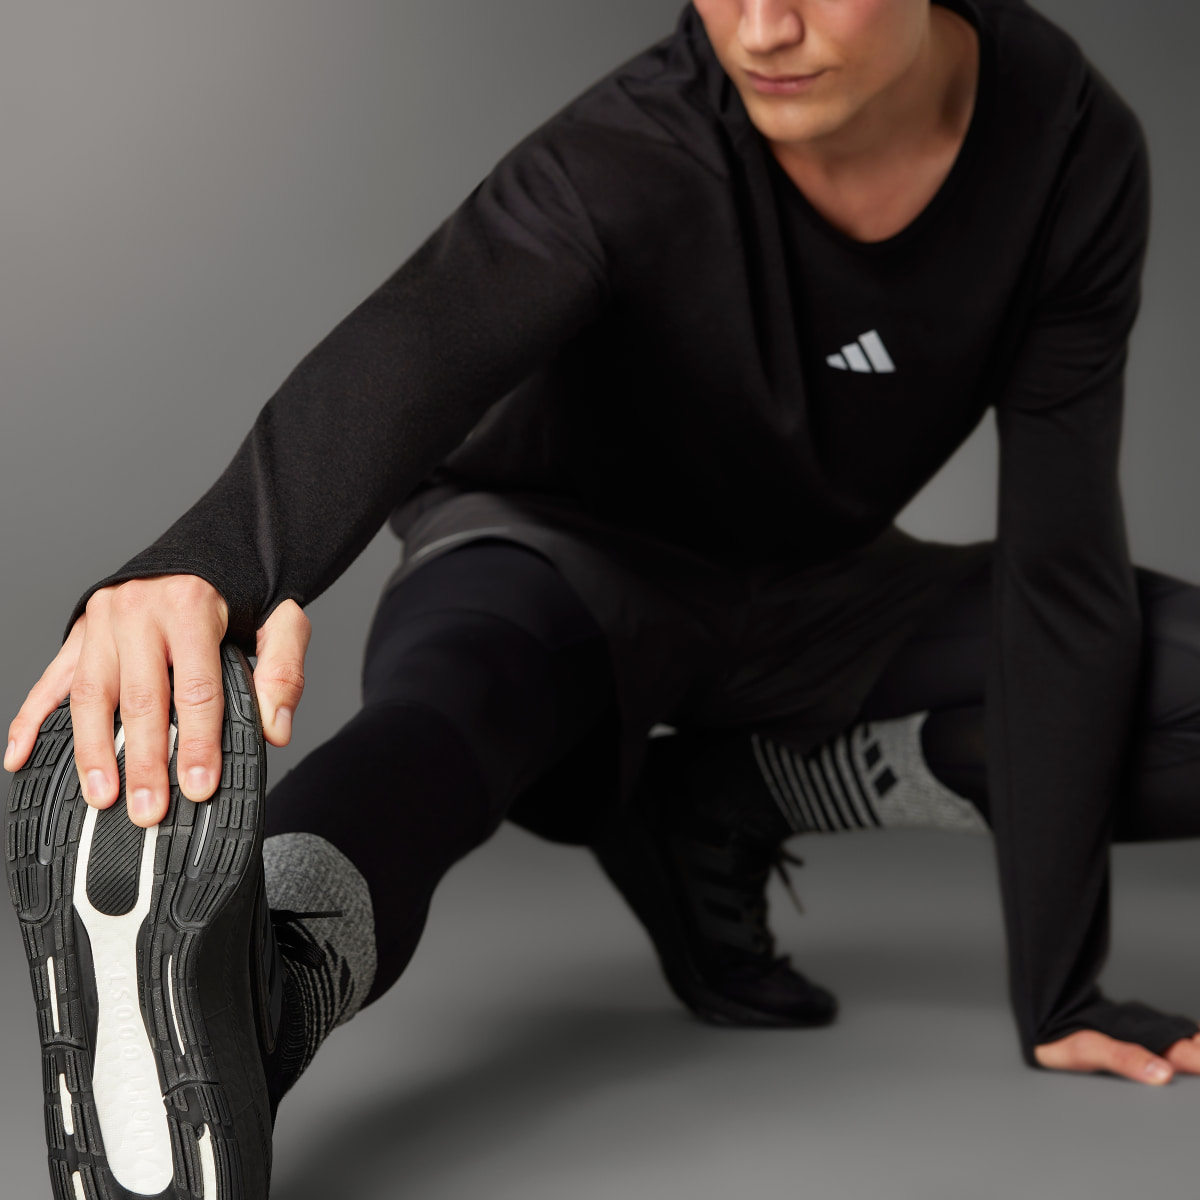 Adidas Koszulka Ultimate Running Conquer the Elements Merino Long Sleeve. 7